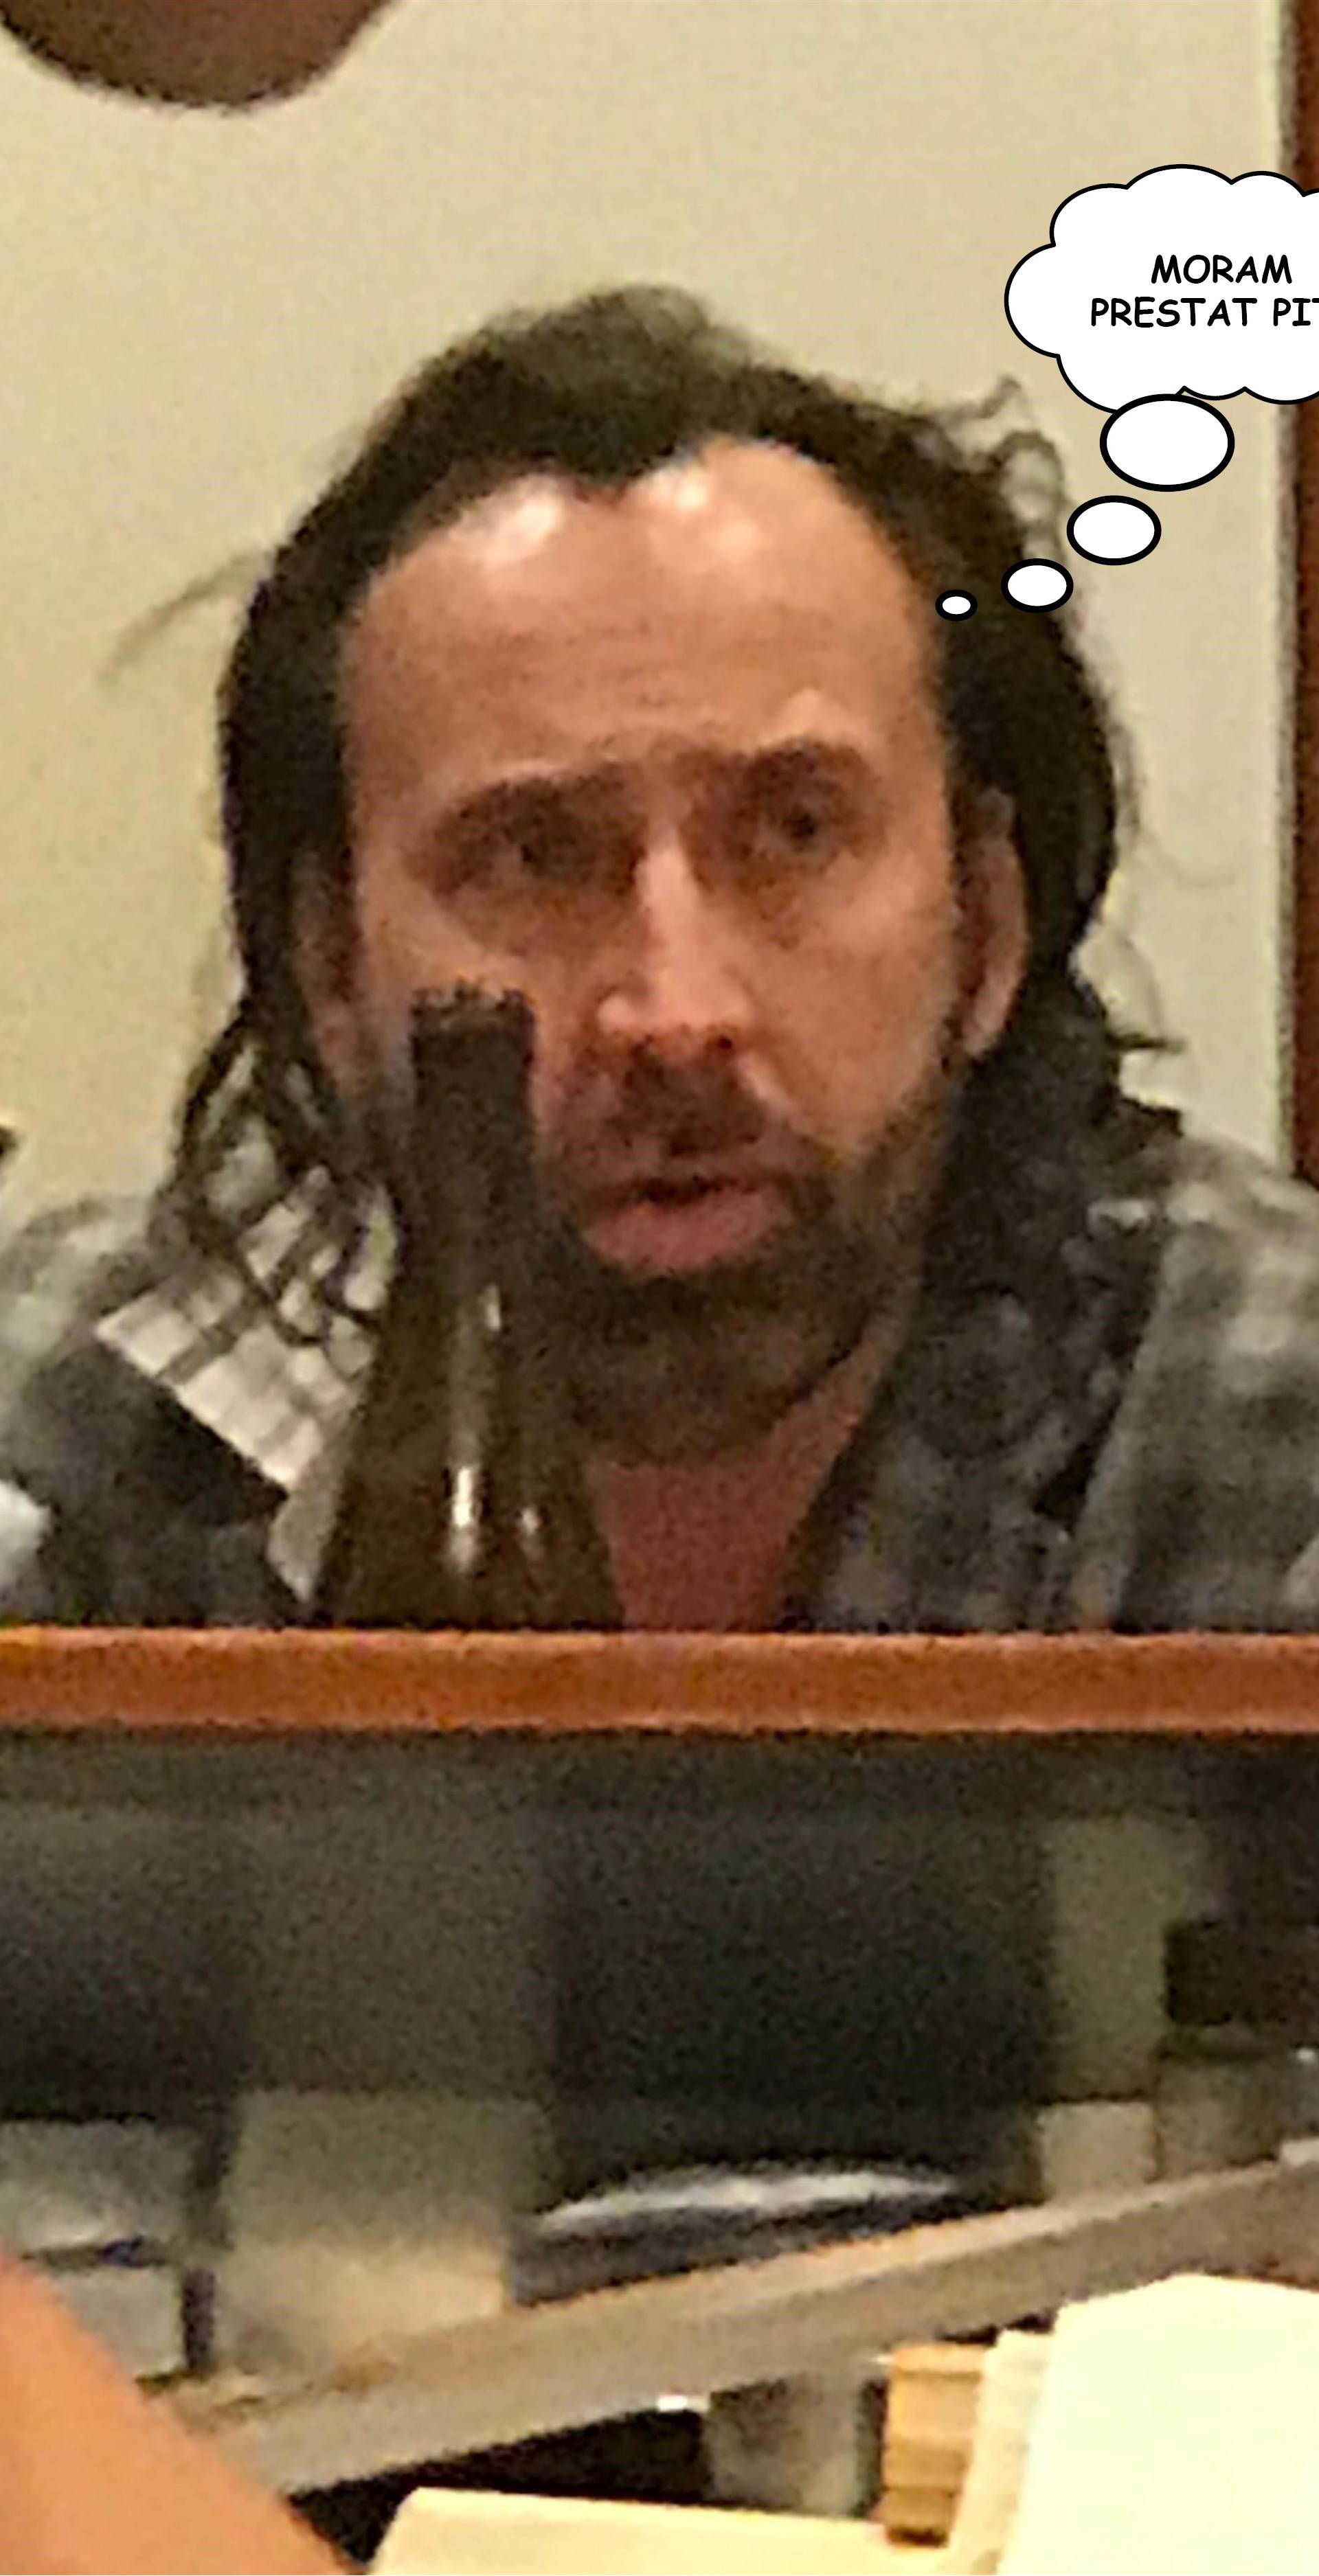 Nicolas Cage i slučaj propalog 'uleta': Drama u sushi baru...